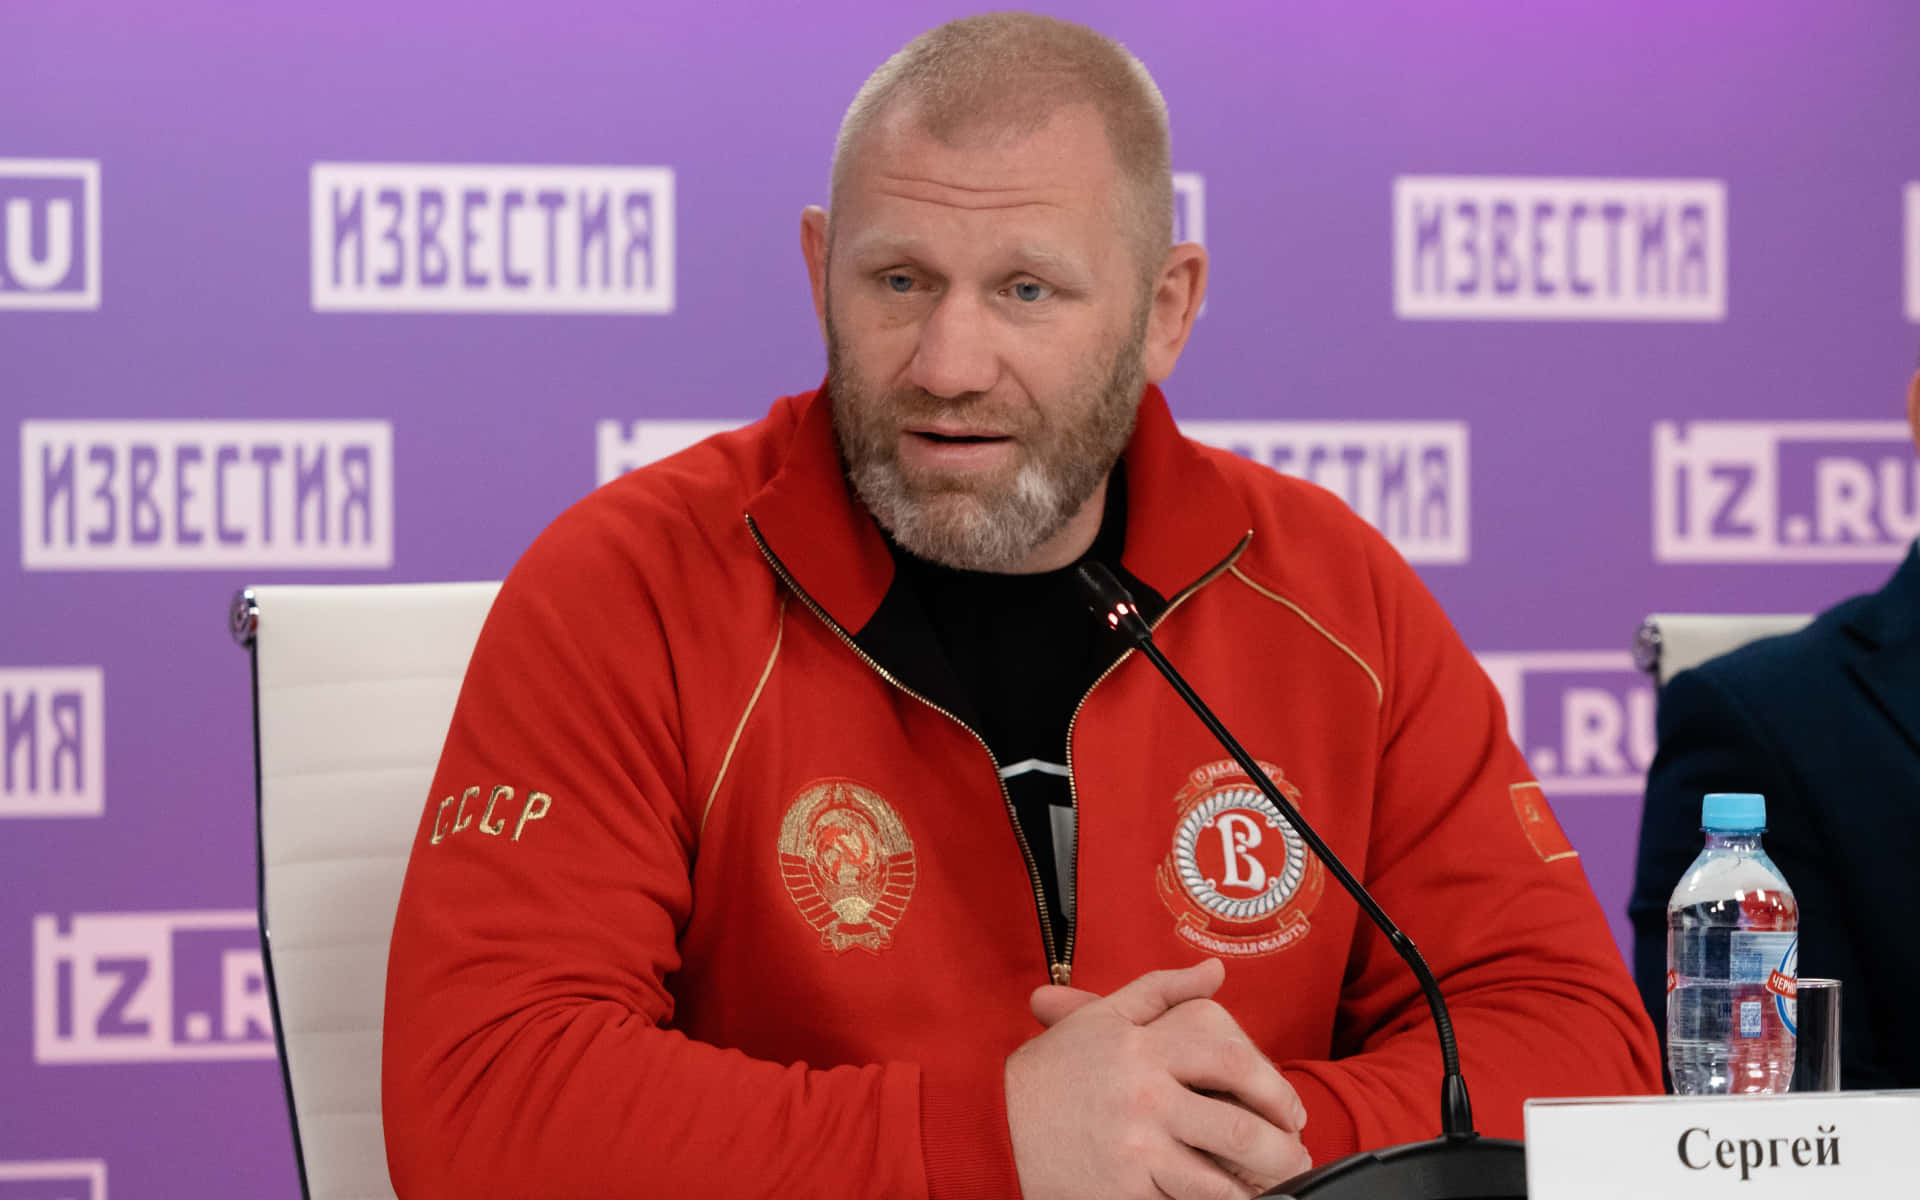 Sergei Kharitonov, Renowned Russian MMA Fighter, Attending a Press Conference Wallpaper